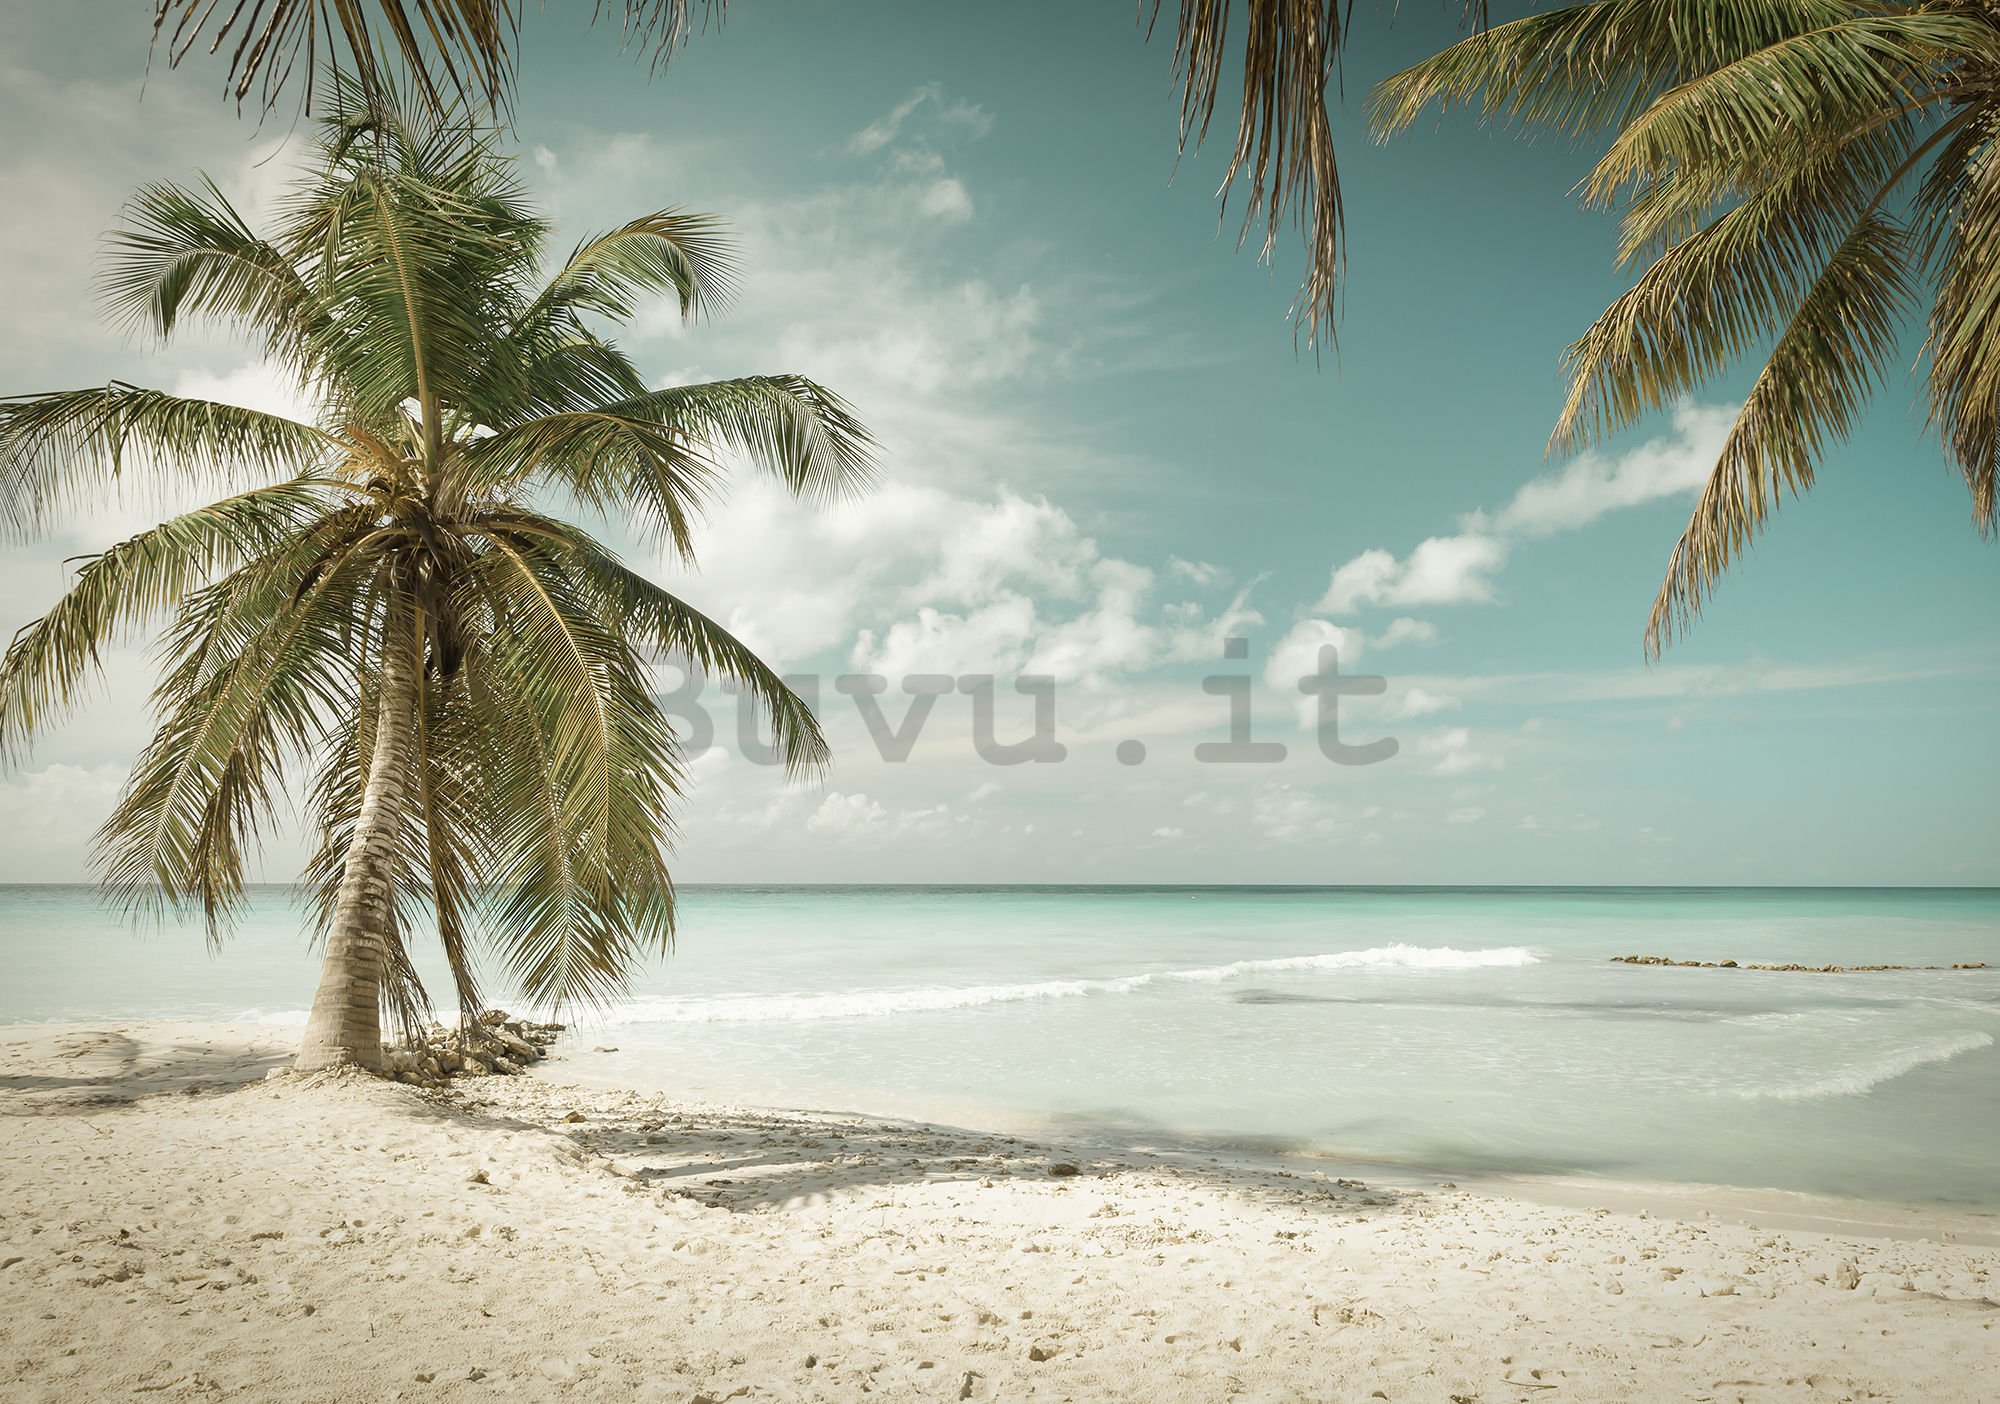 Fotomurale: Le palme sul mare - 254x368 cm